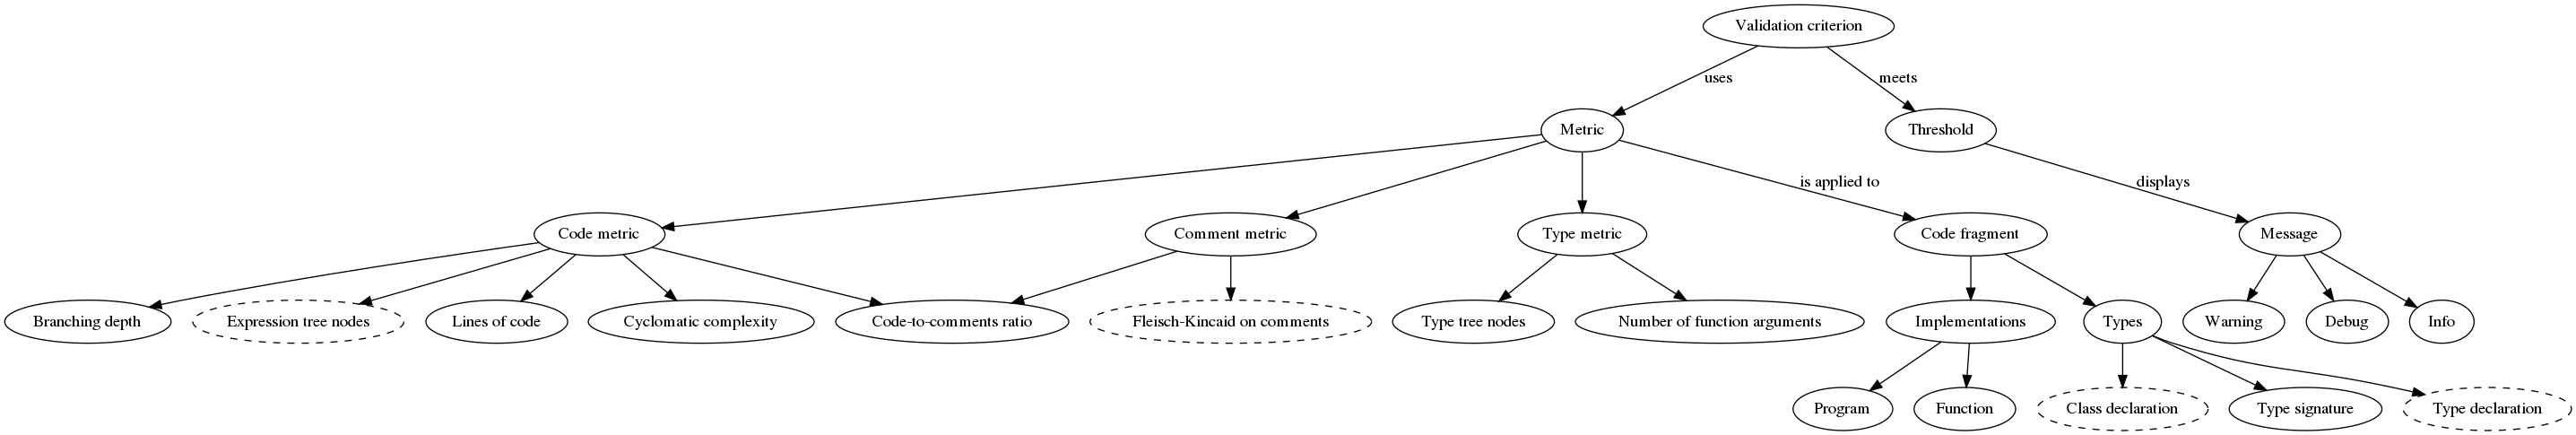 Diagram of concepts